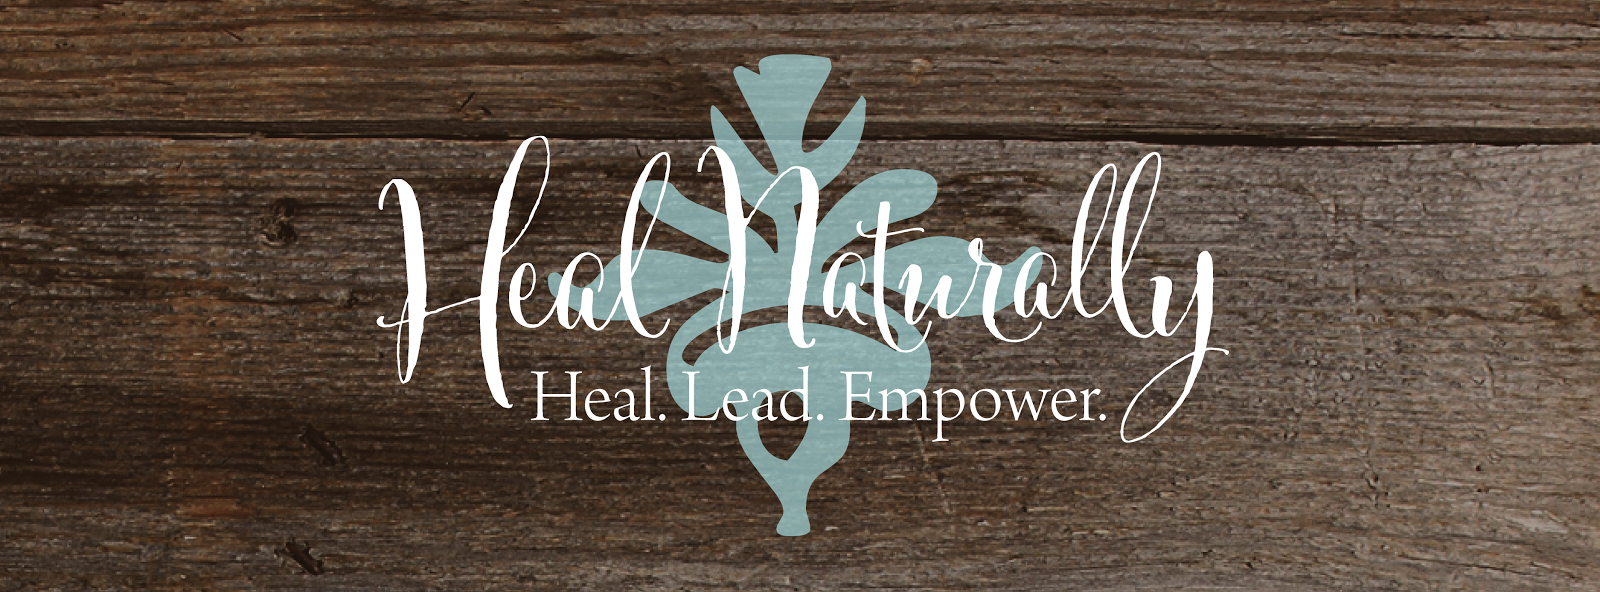 Heal Naturally